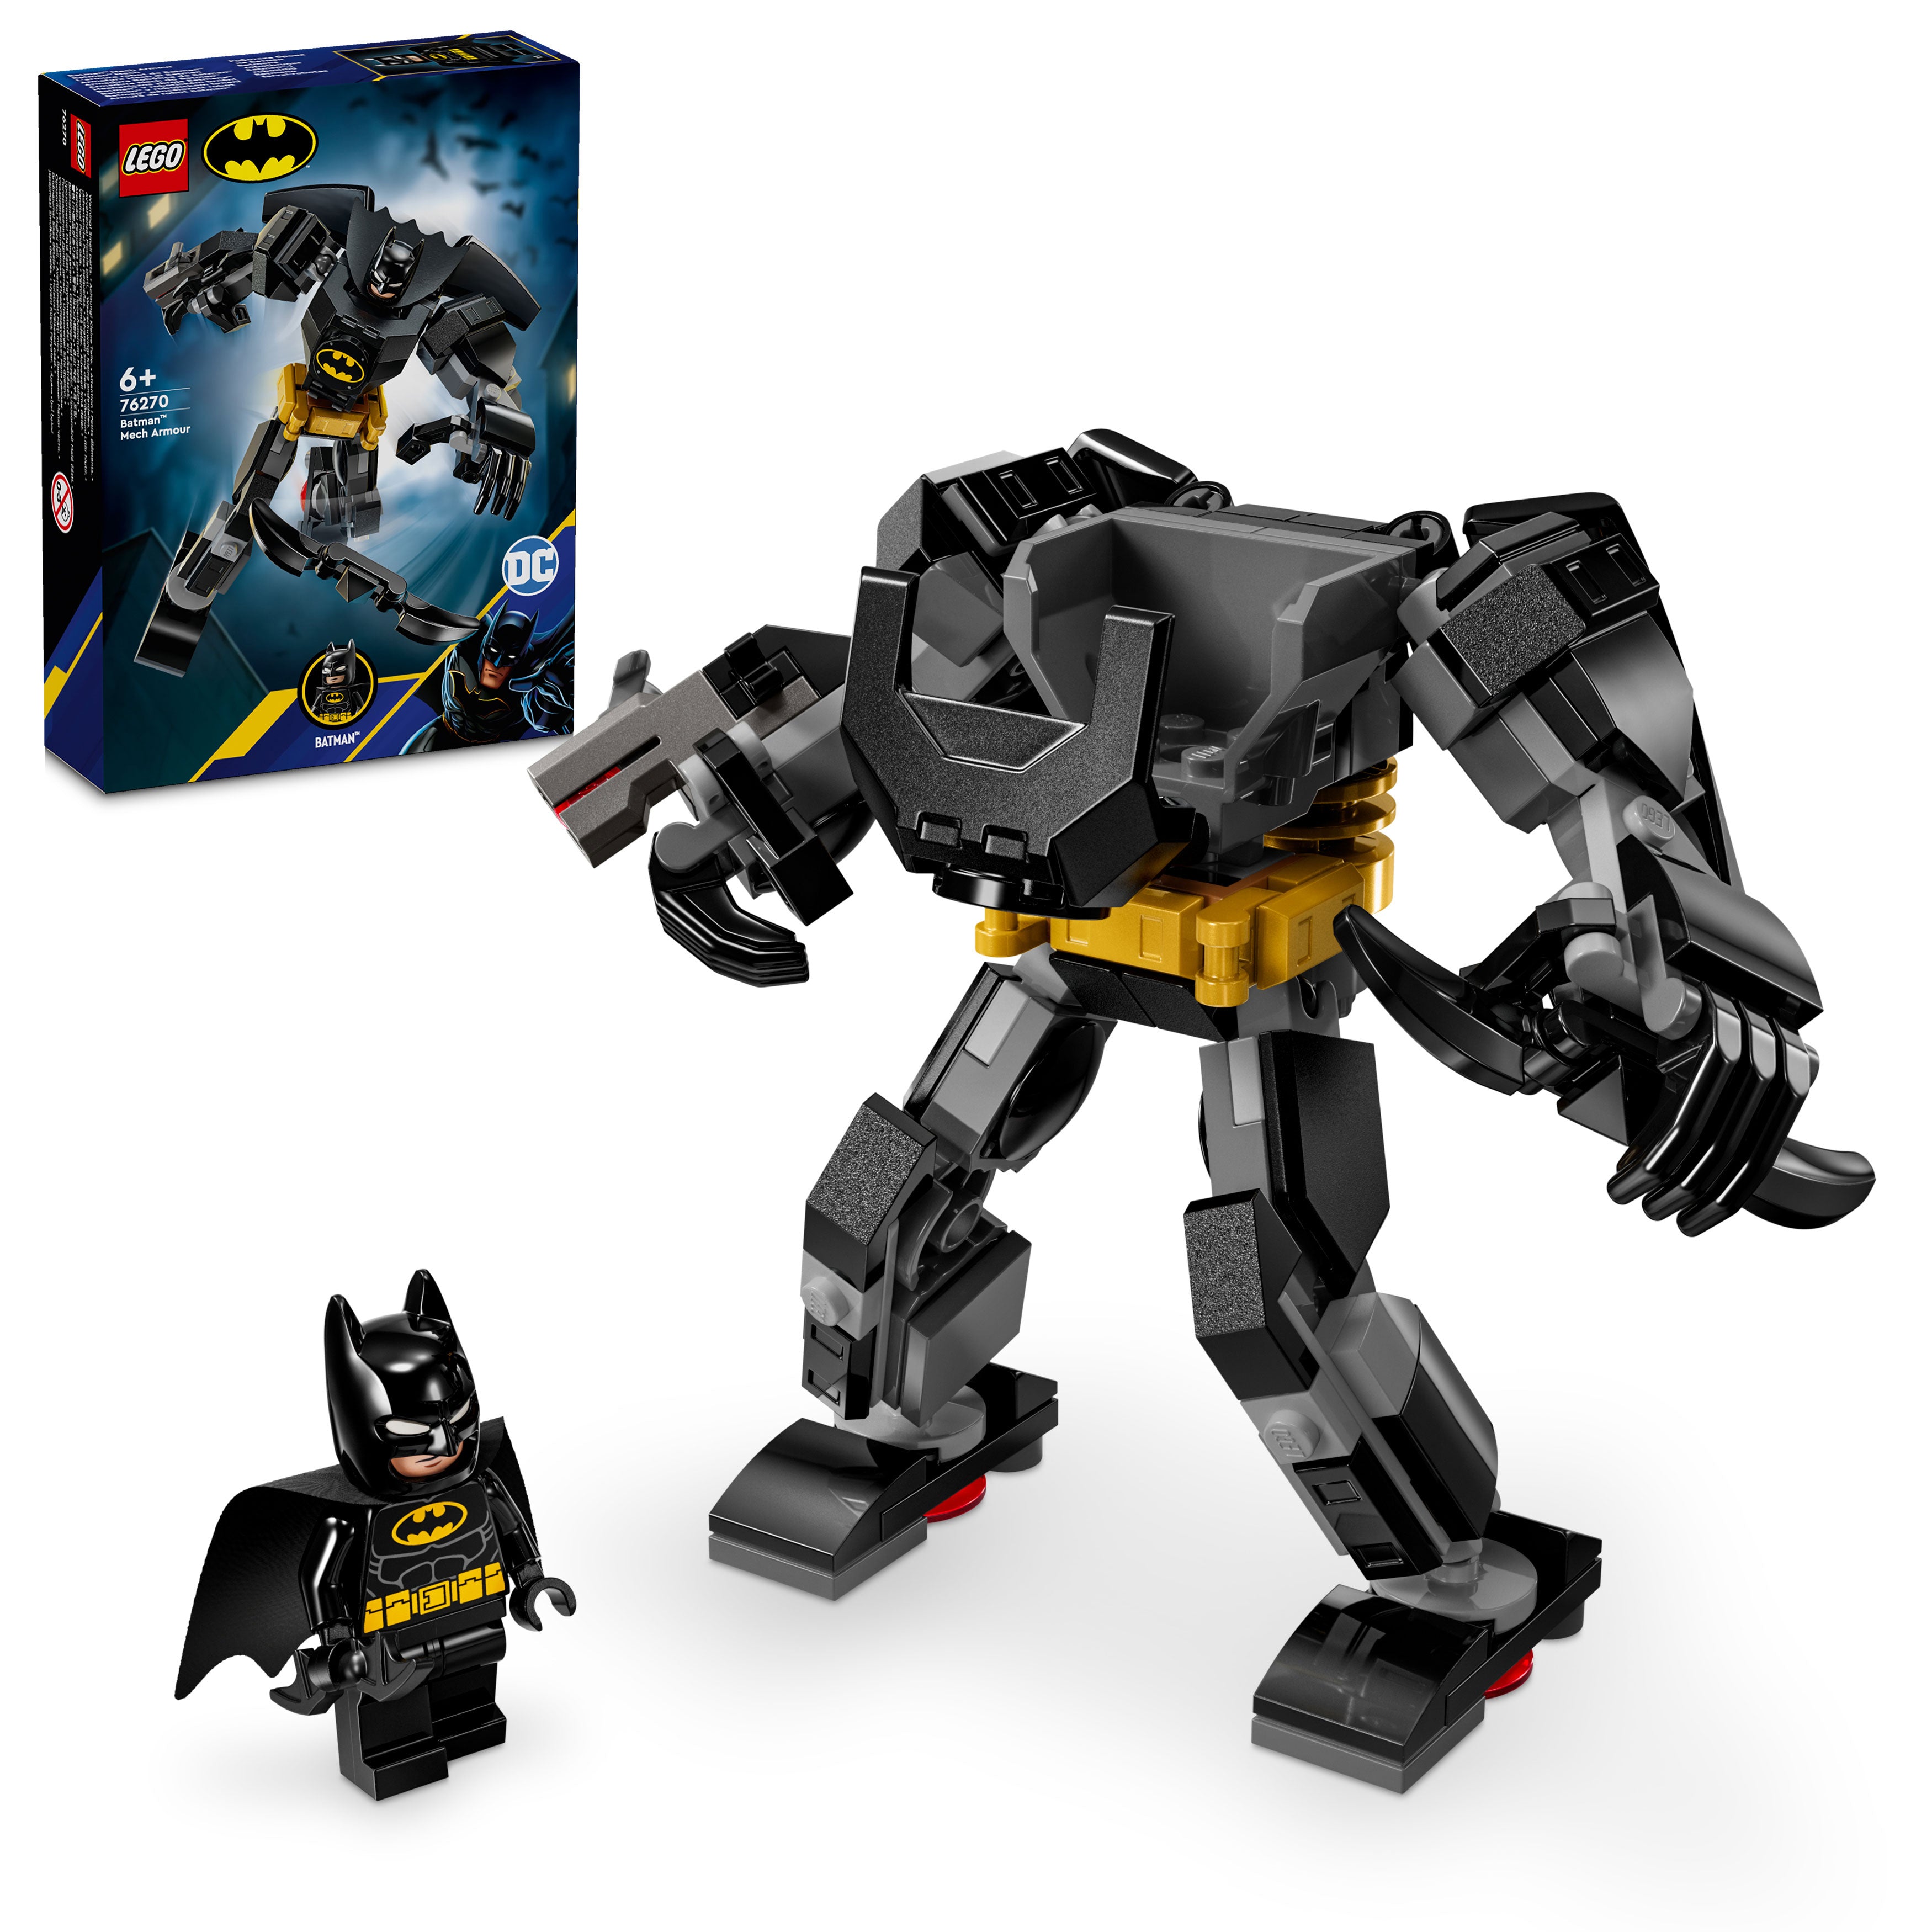 Lego 76270 Batman Mech Armor